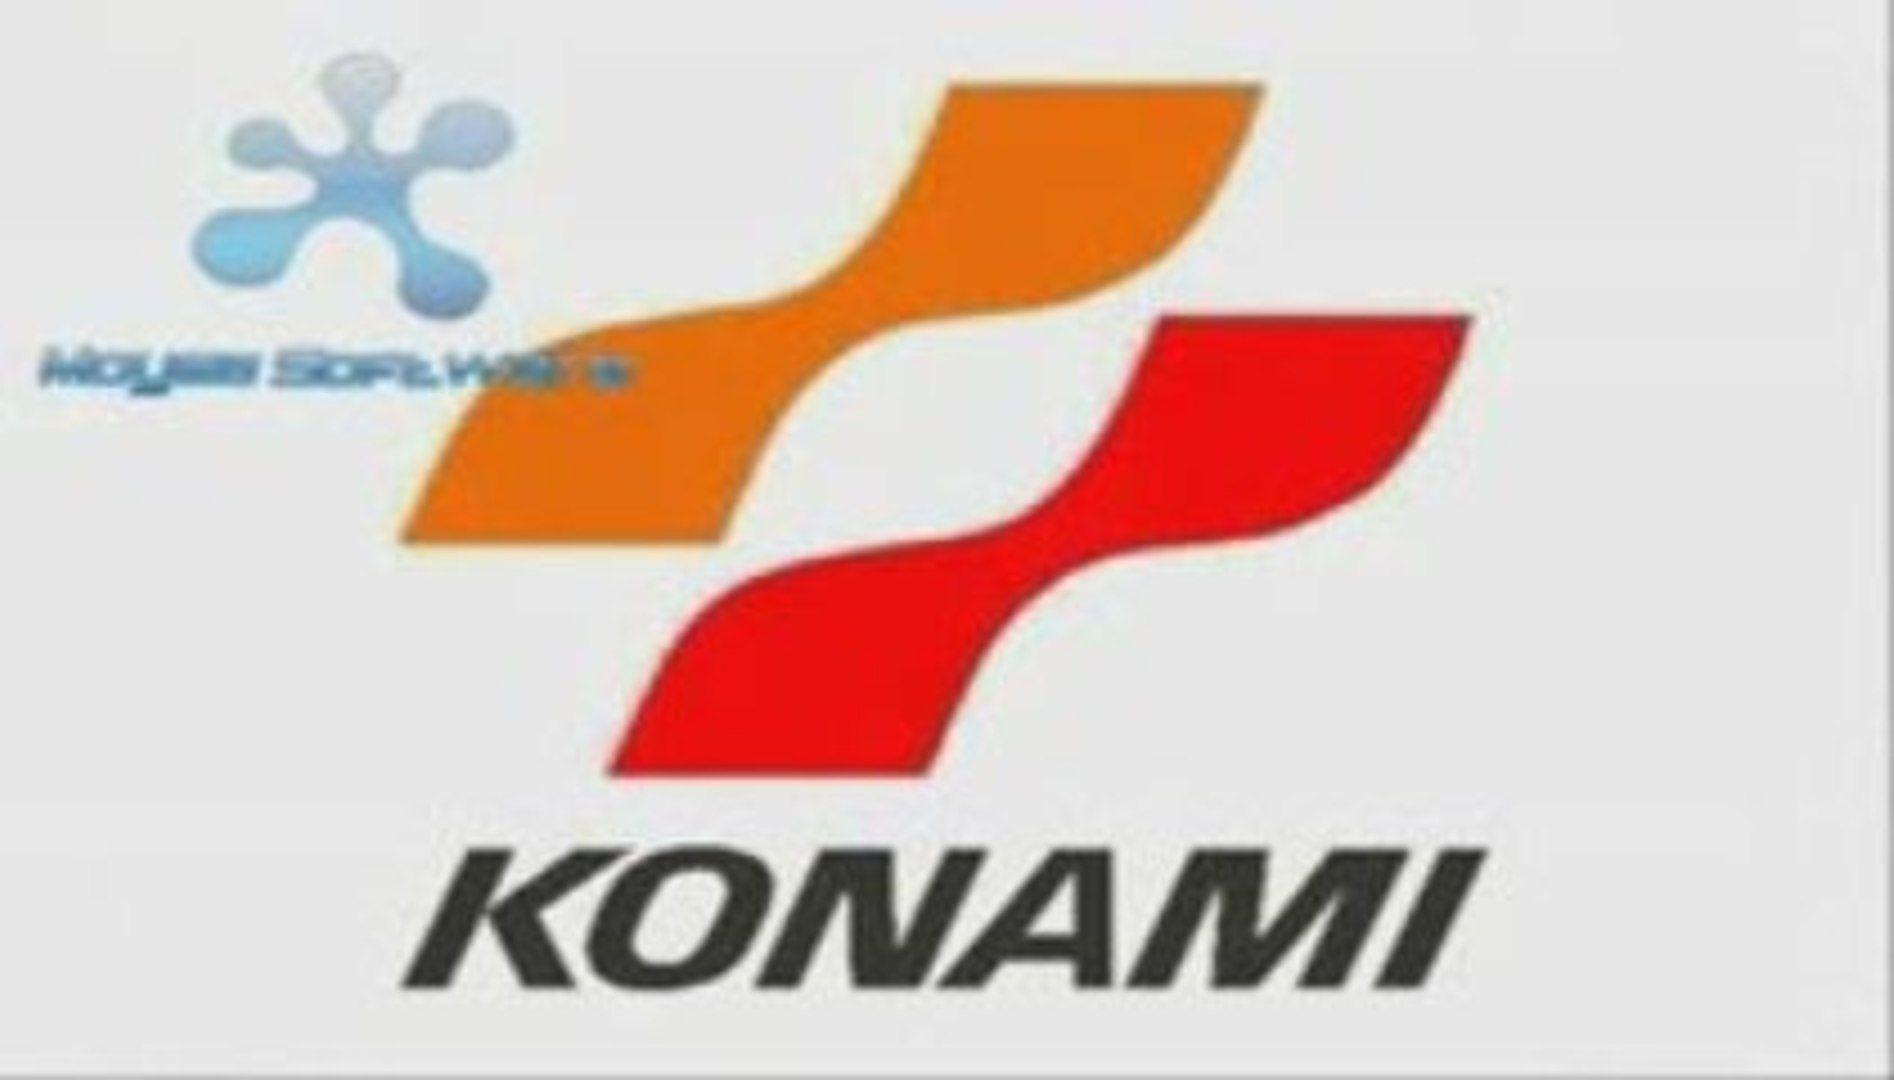 Konami Logo - Konami Walking logo malfunction